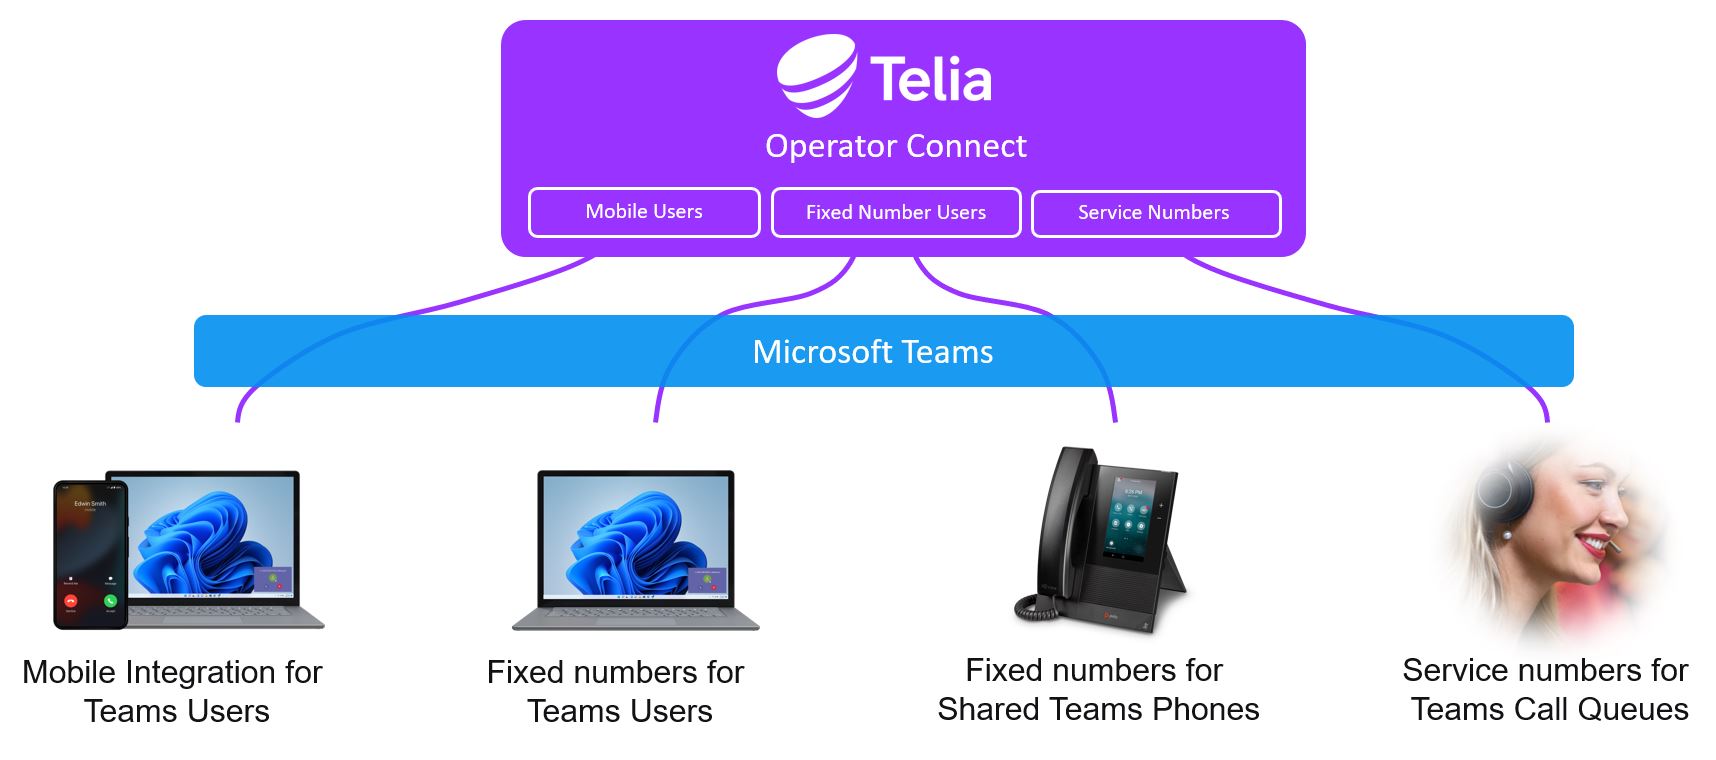 Telia Operator Connect